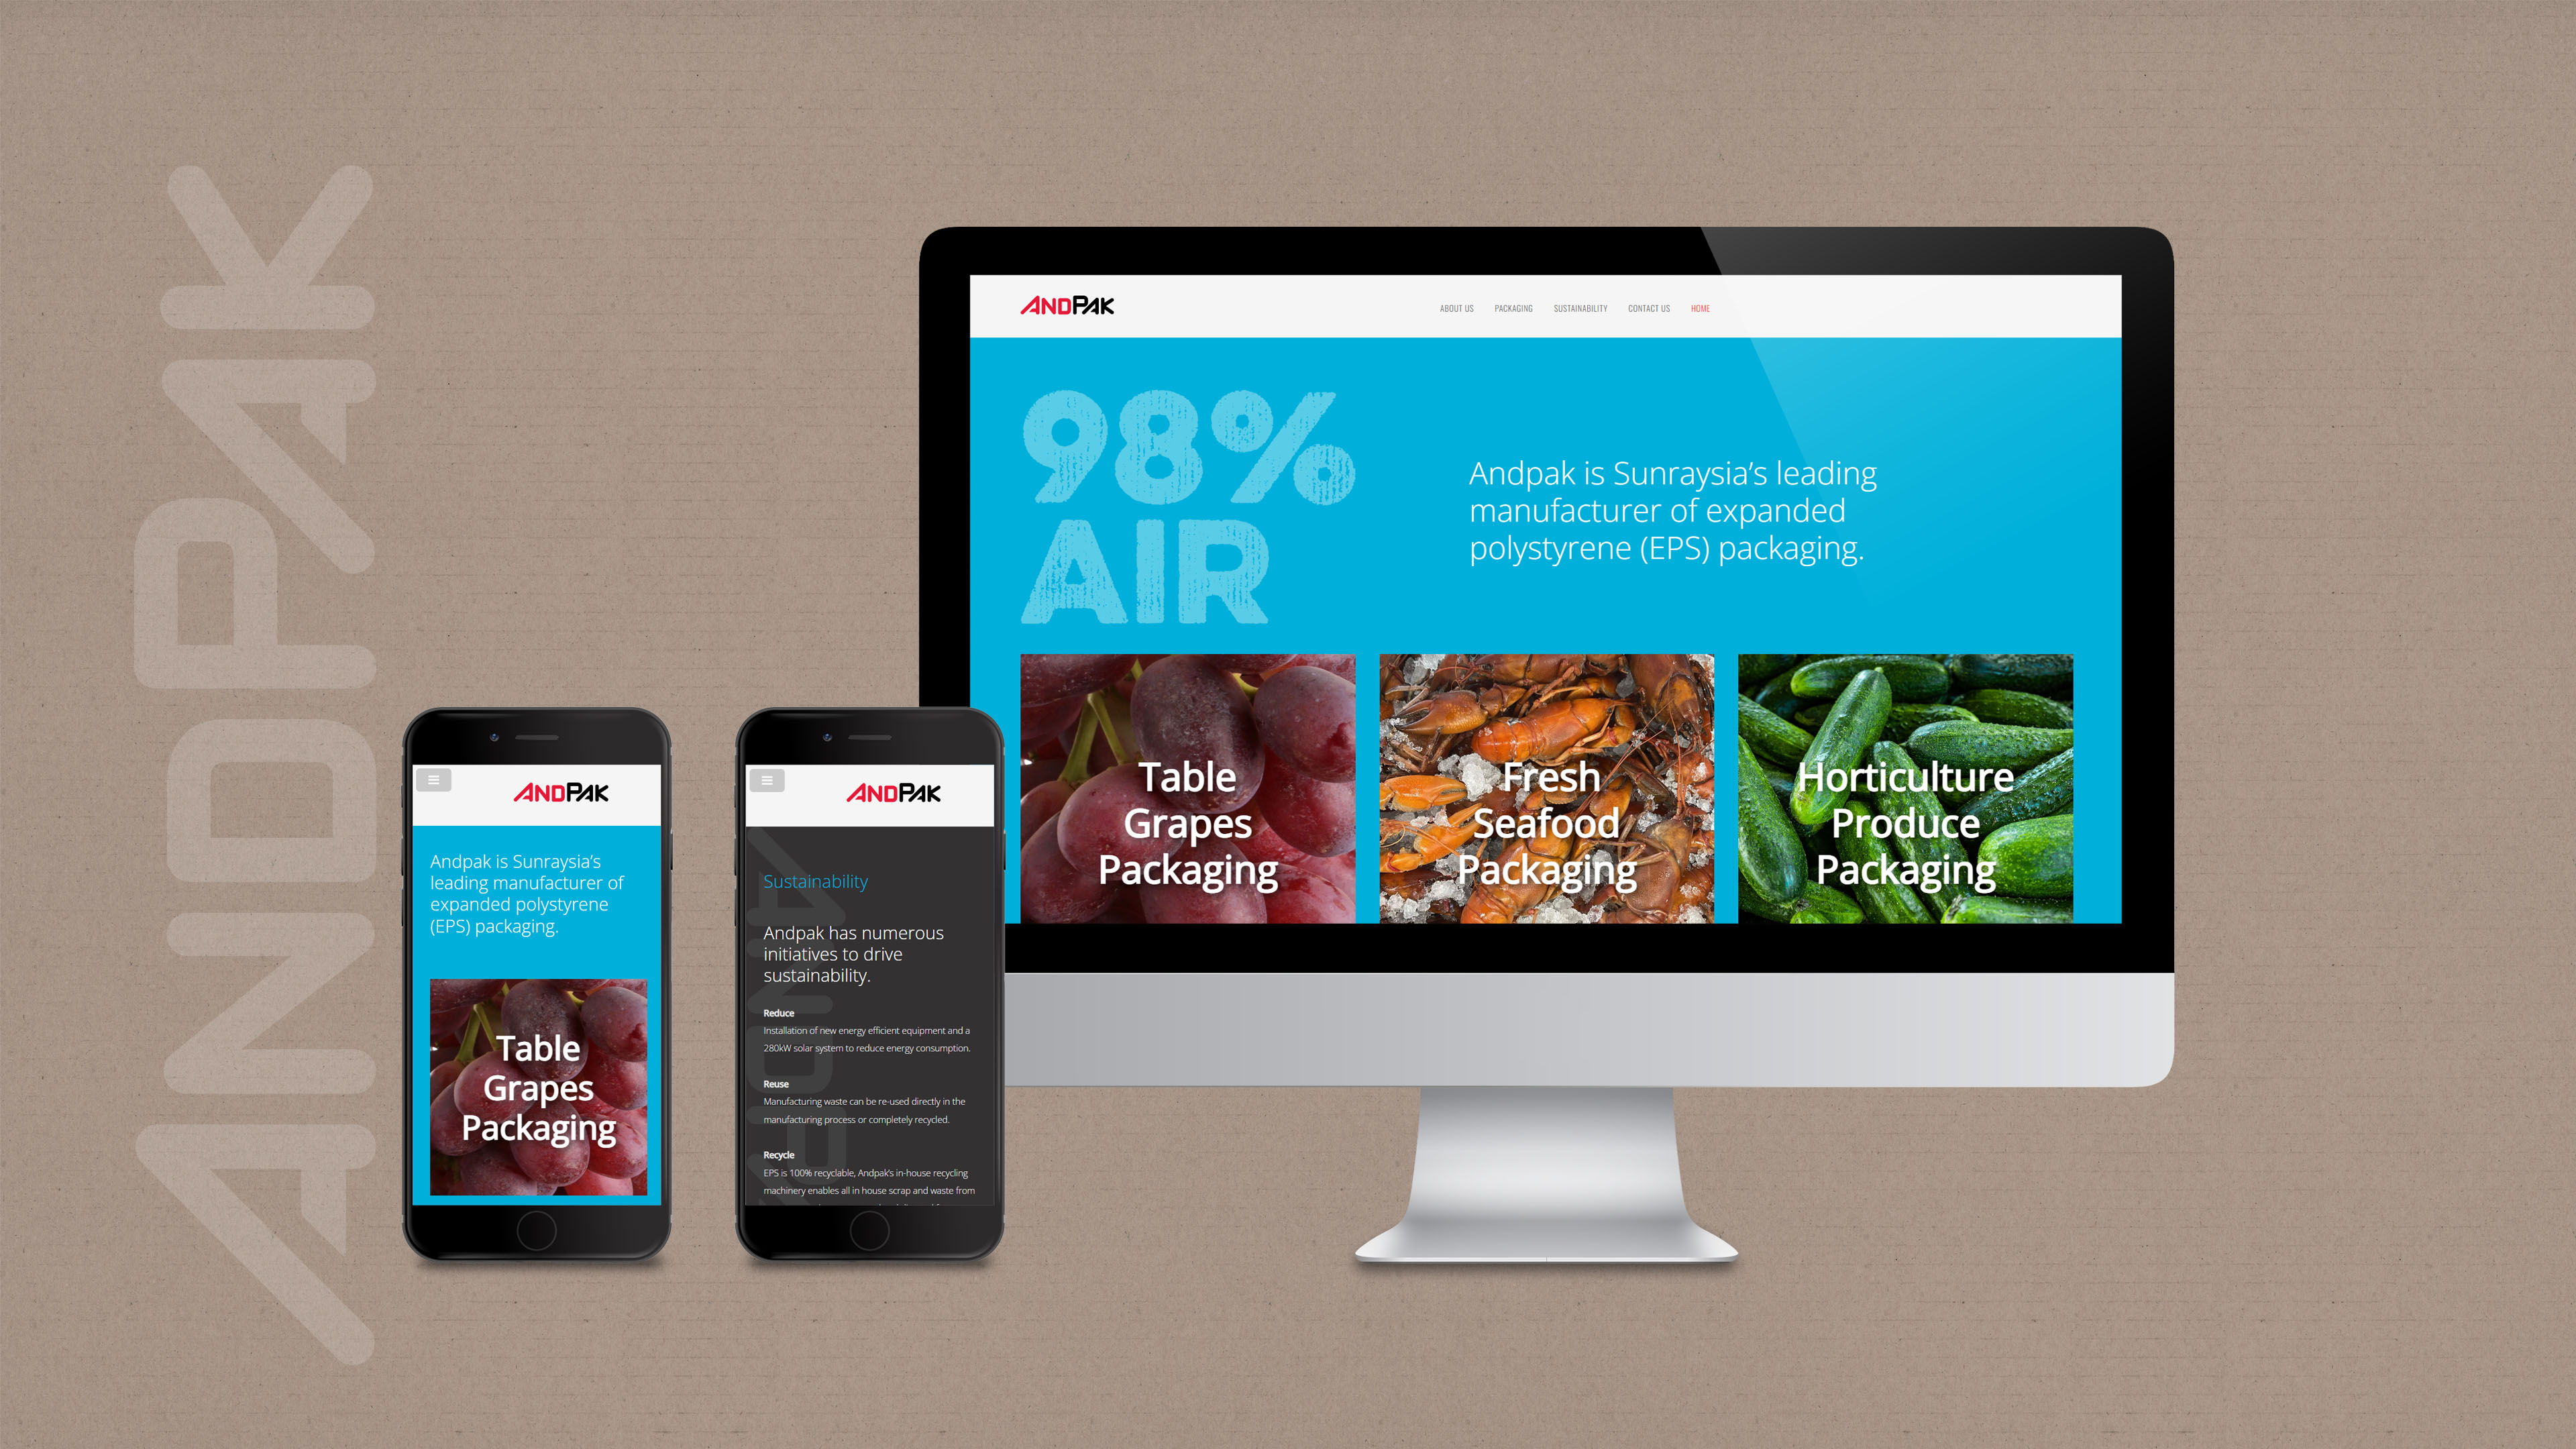 AndPak Branding and Website Design - Saunders Design Group